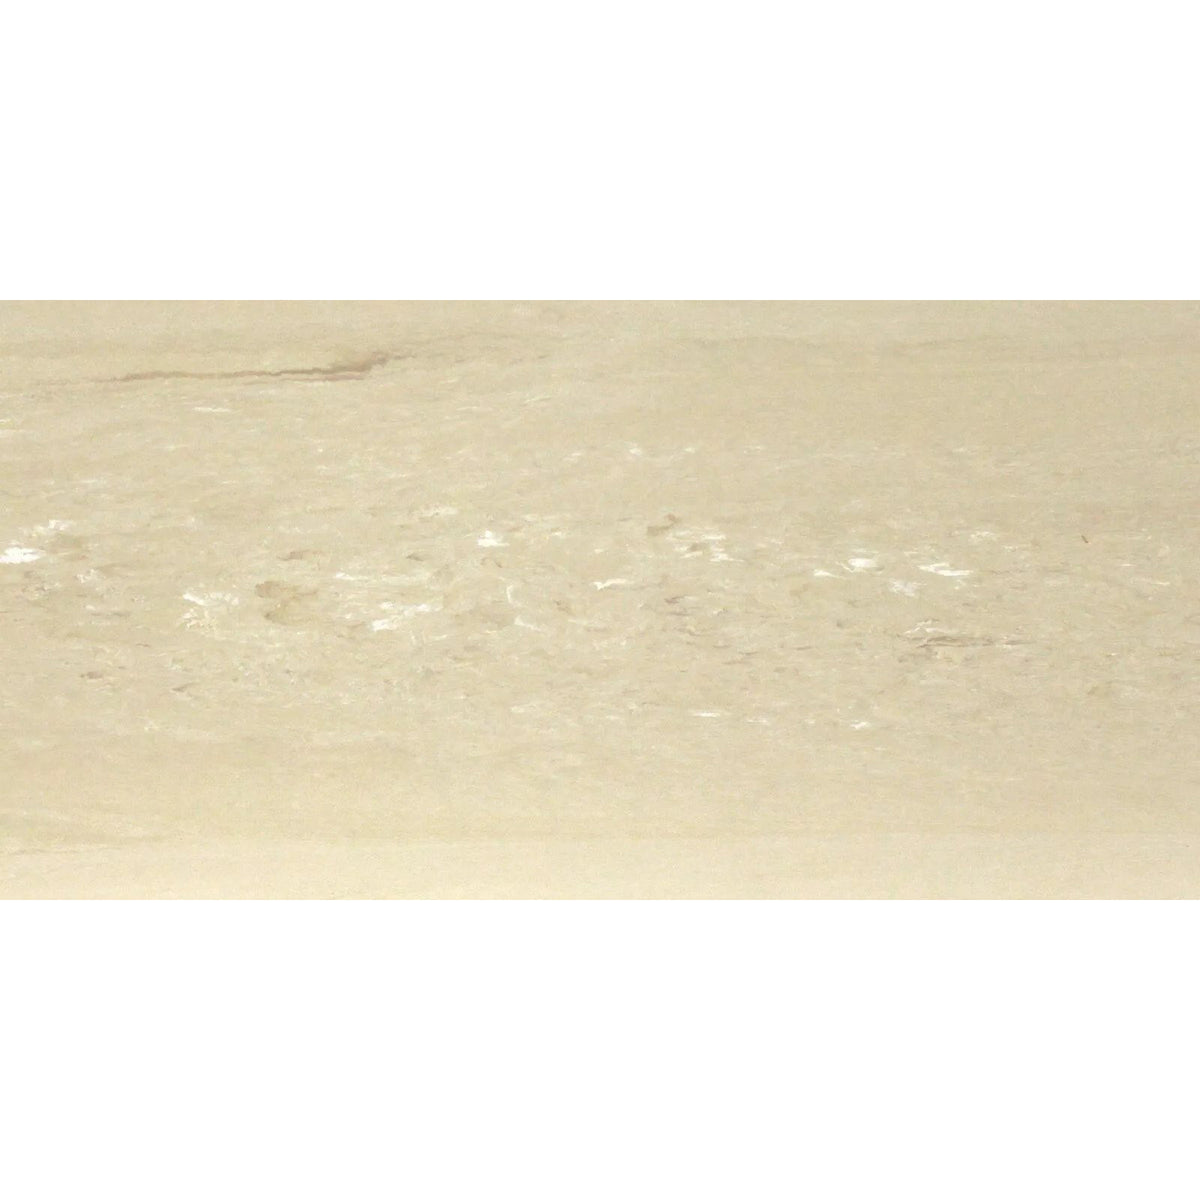 Tarkett - Johnsonite Minerality - 12 in. x 24 in. Rubber Tile - Marbre